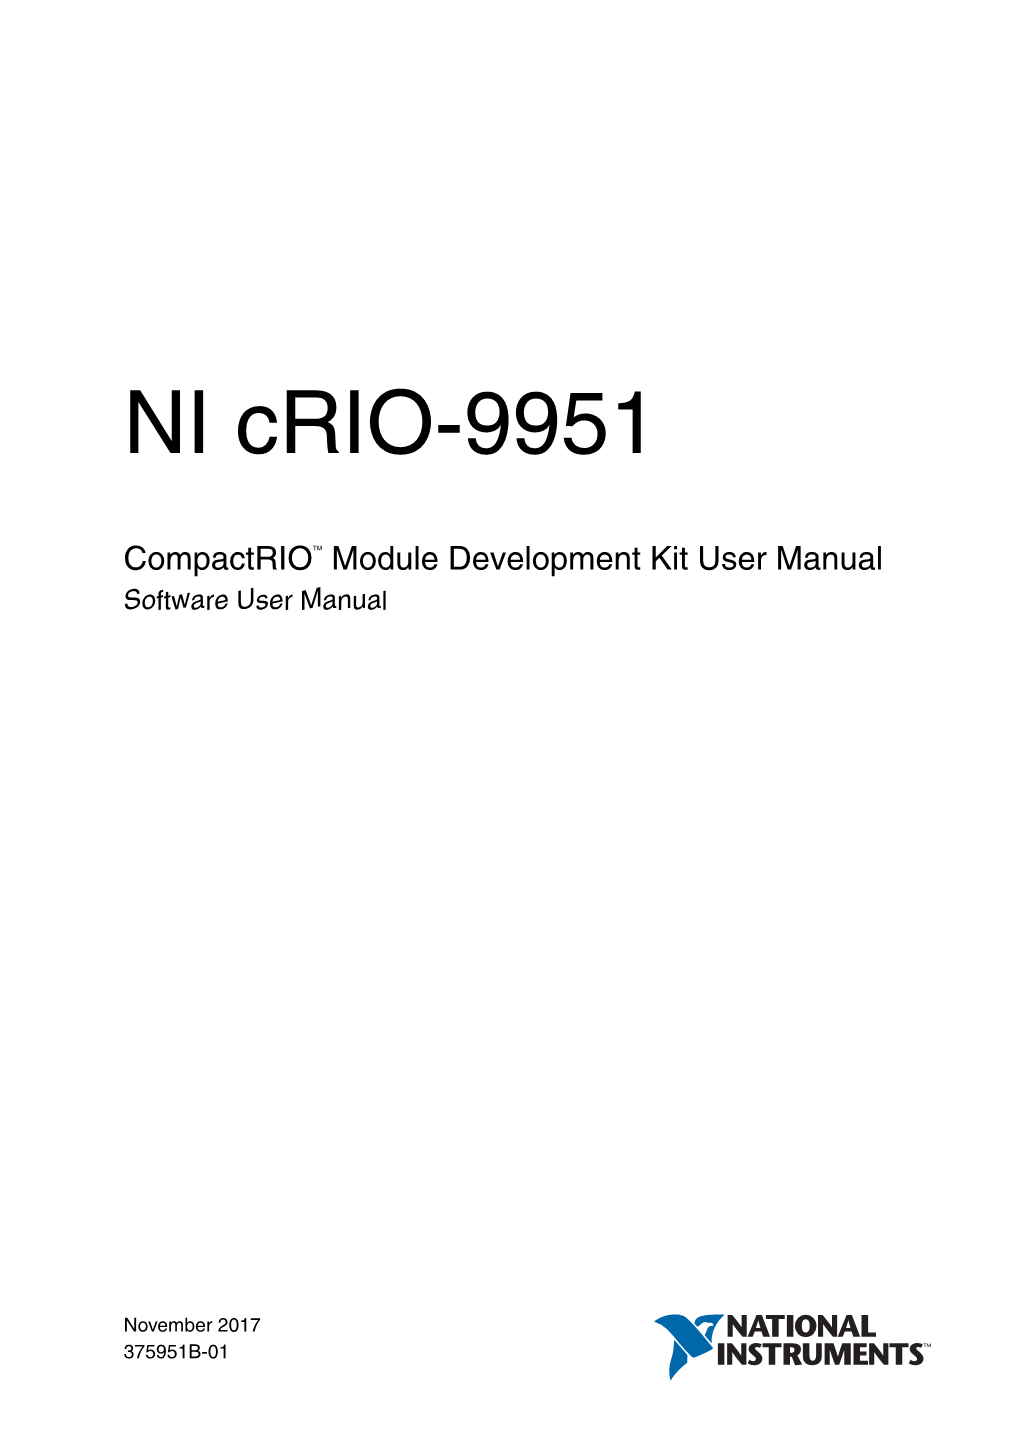 NI Crio-9951 Module Development Kit User